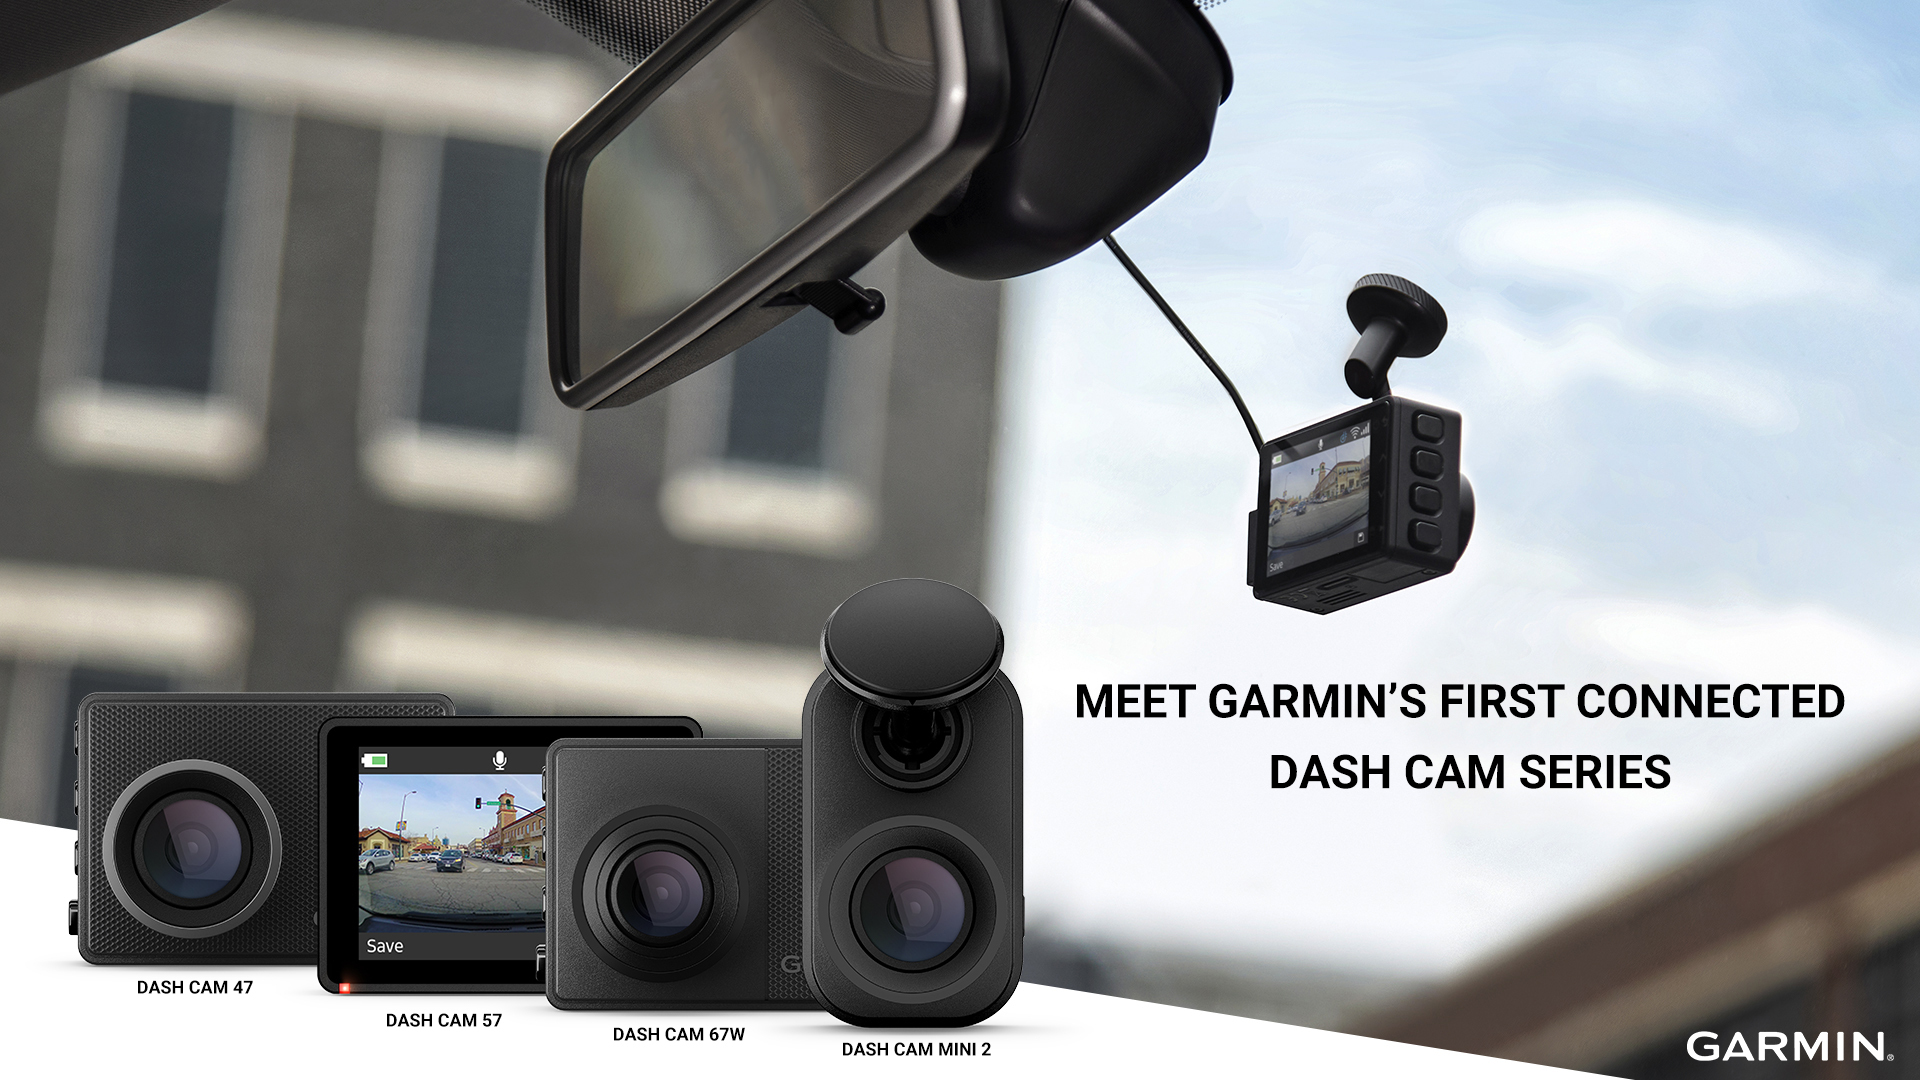 https://mms.businesswire.com/media/20210609005003/en/881394/5/Garmin+Dash+Cam+V1.jpg